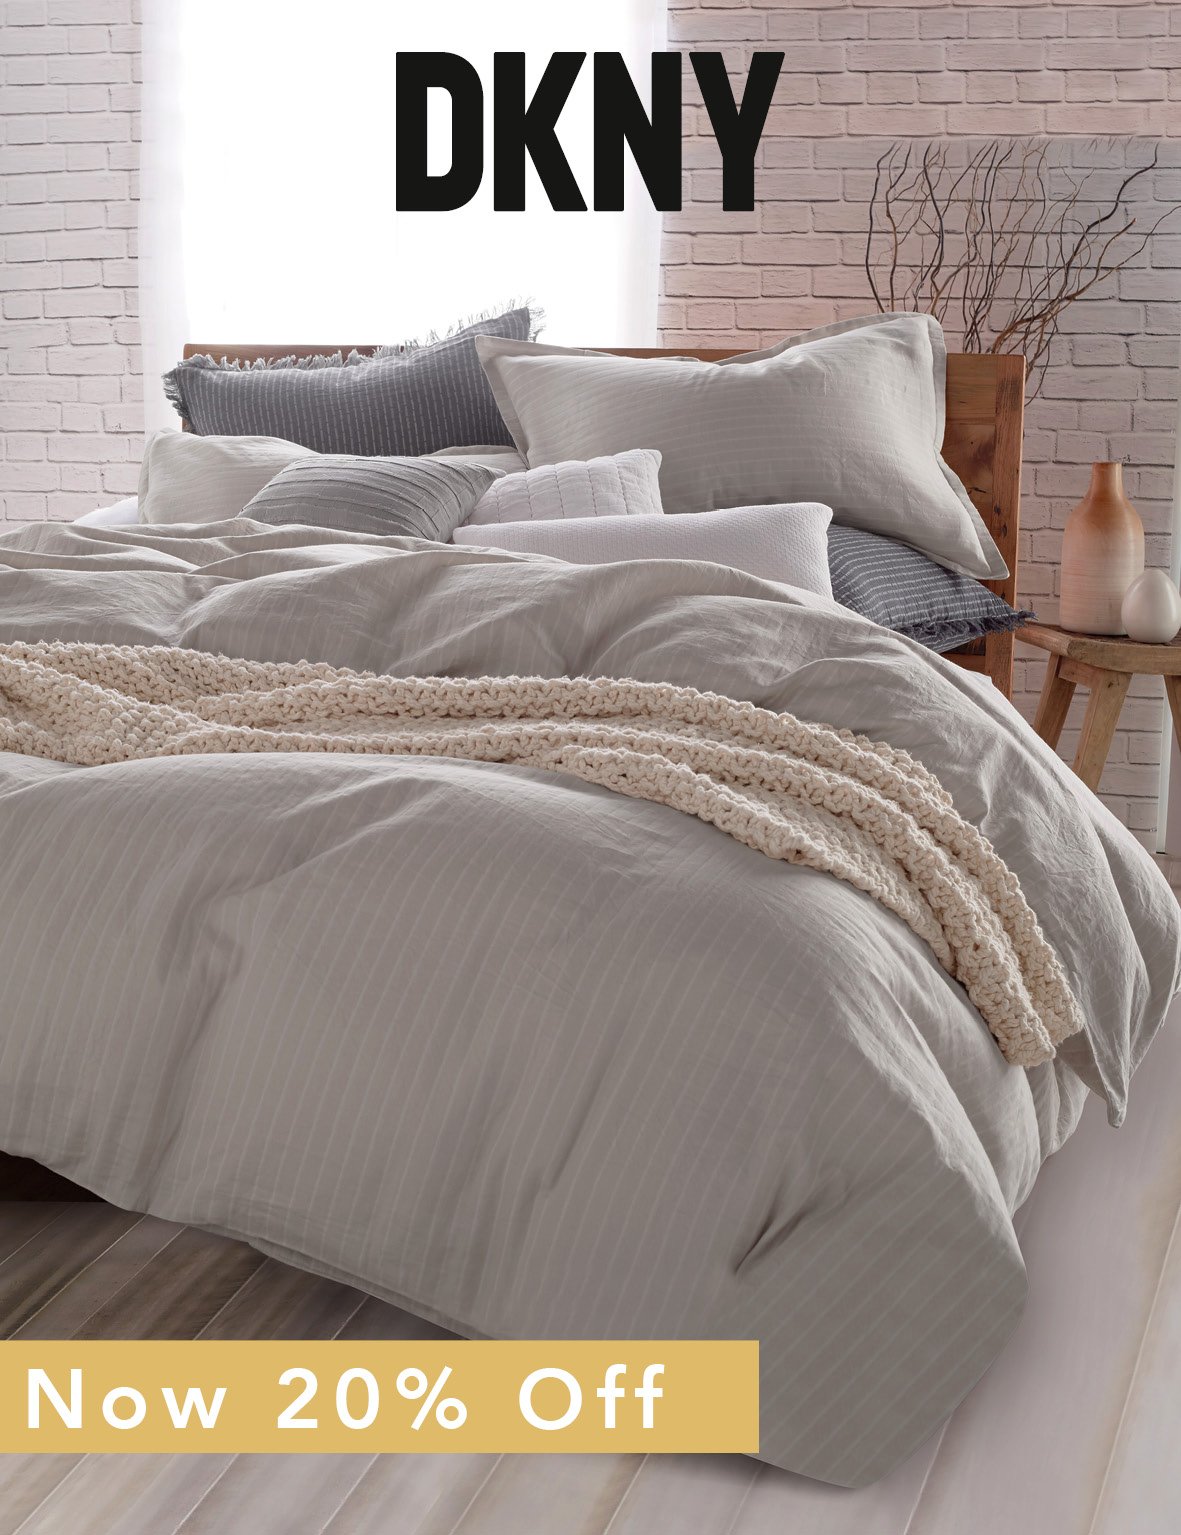 DKNY Comfy Bedding in Platinum